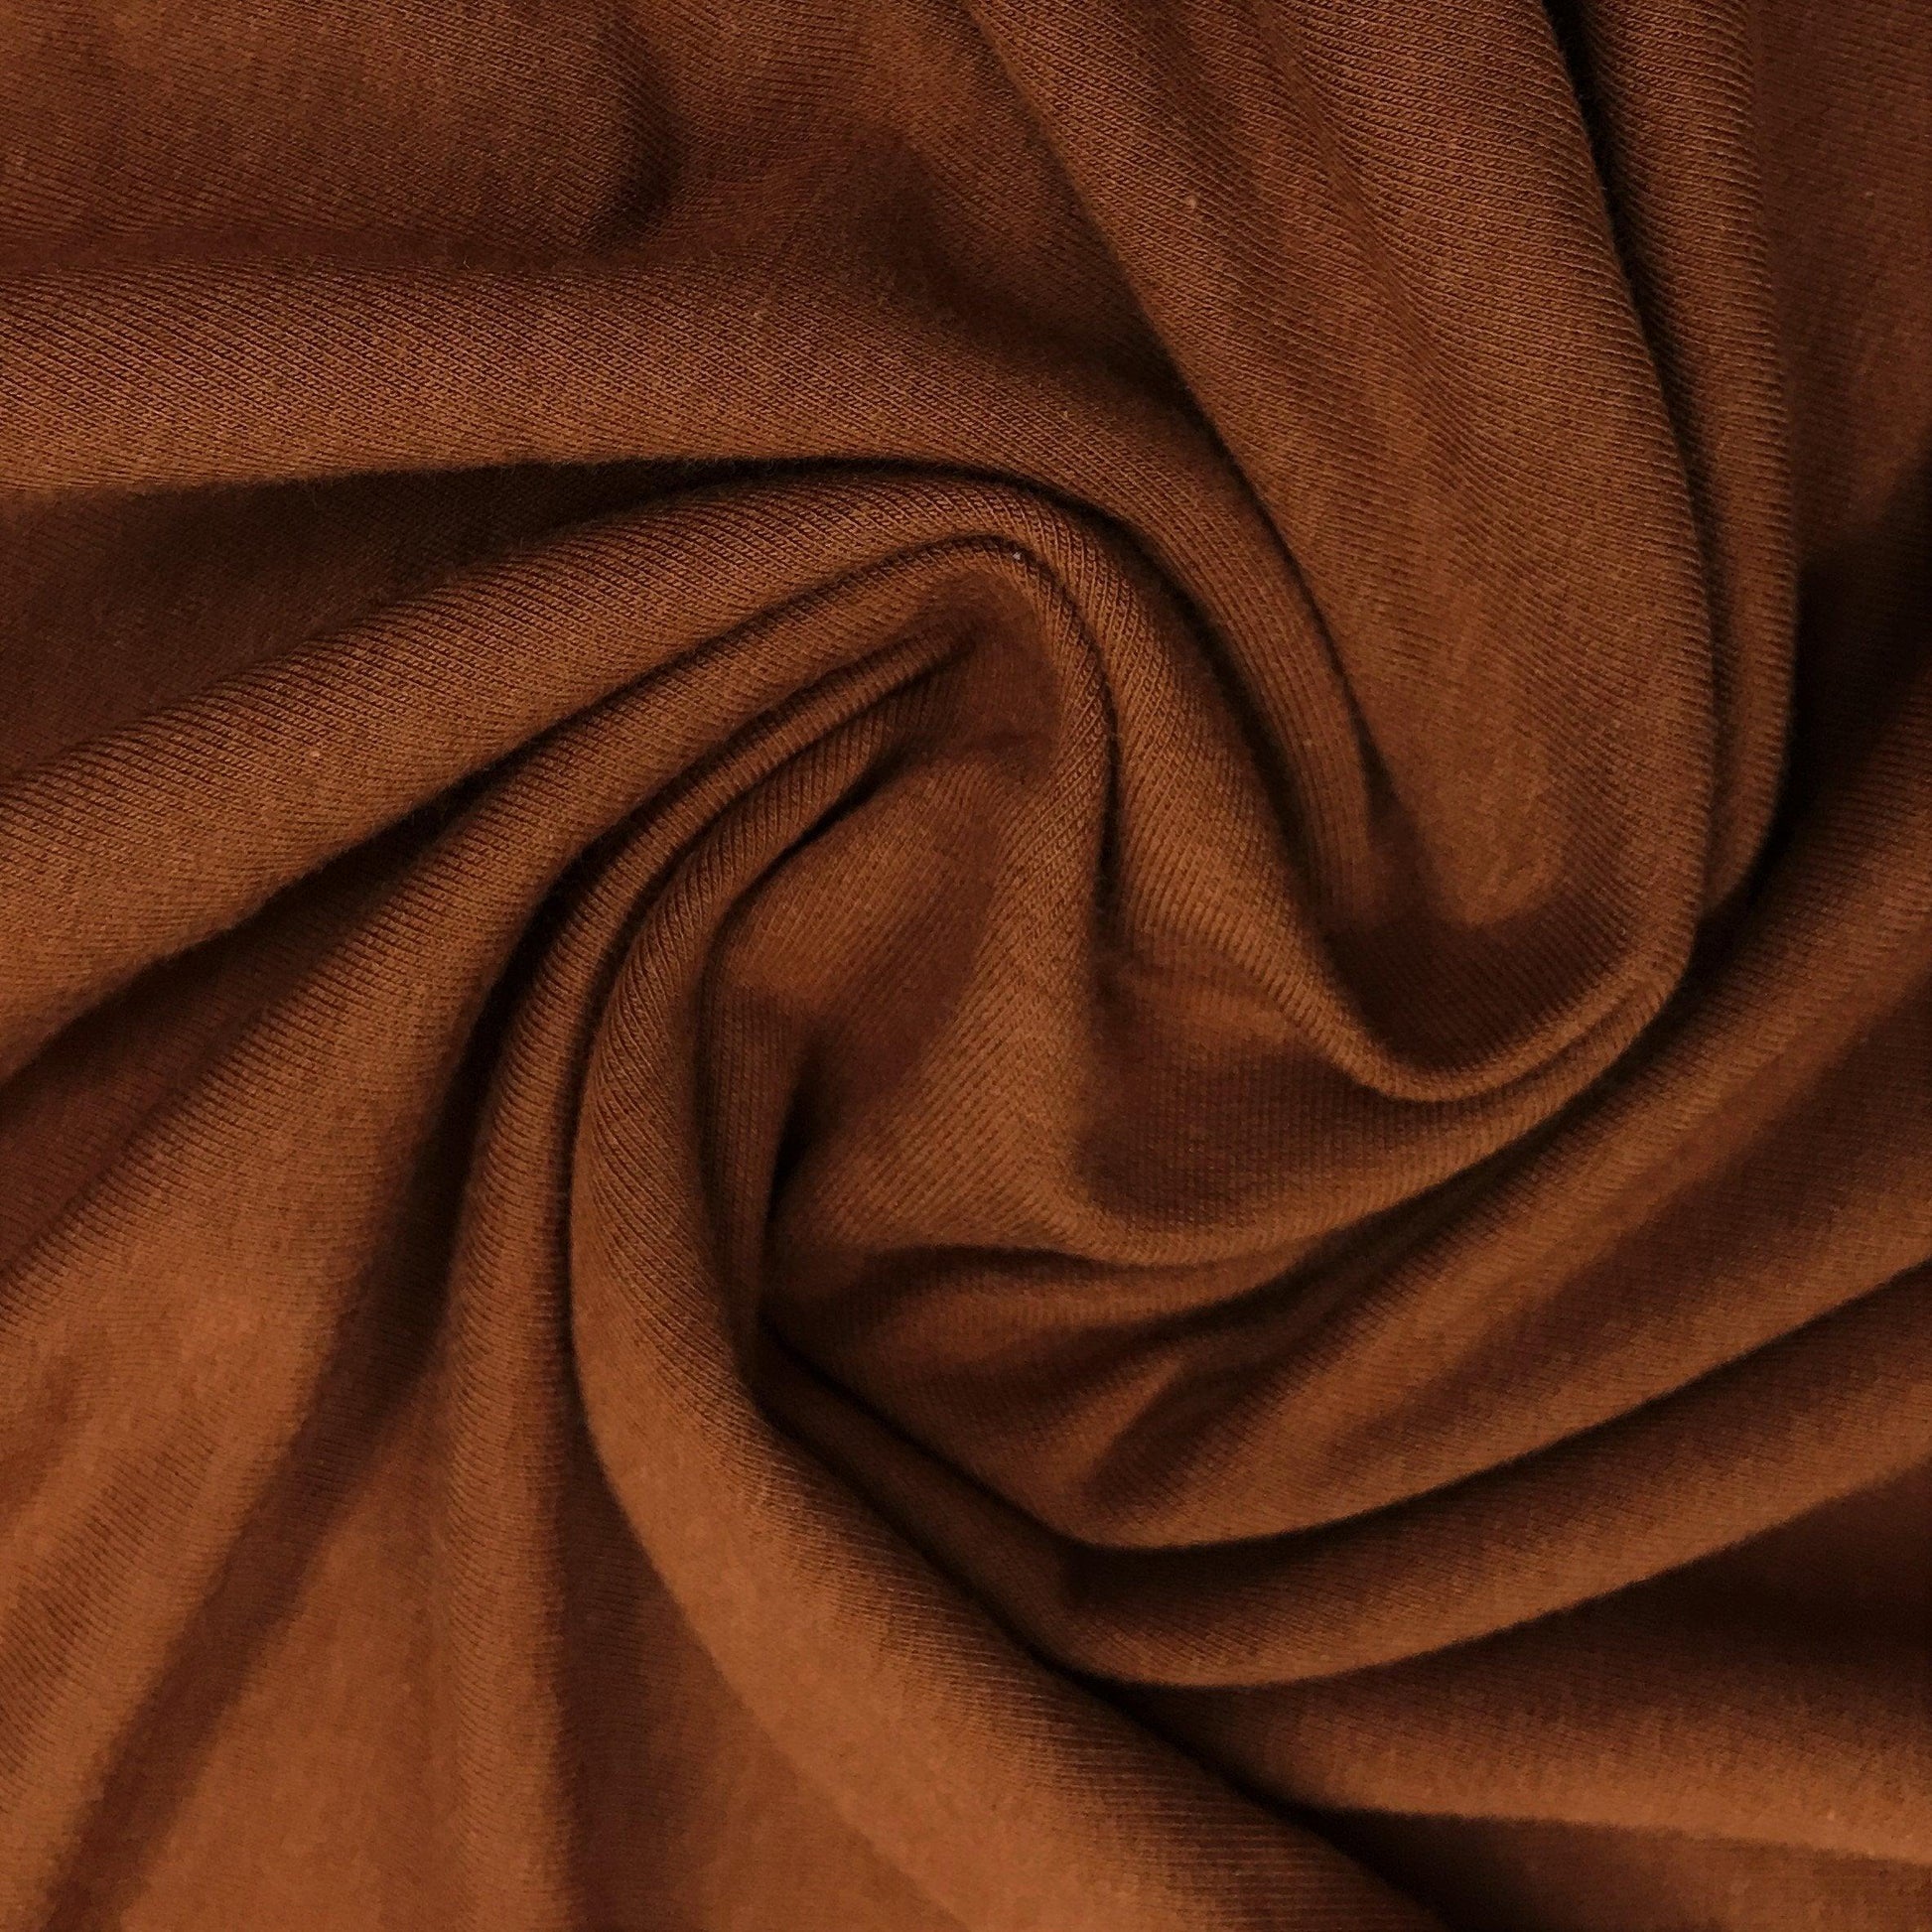 Spice Bamboo/Spandex Jersey Fabric - 240 GSM, $9.35/yd - Rolls - Nature's Fabrics